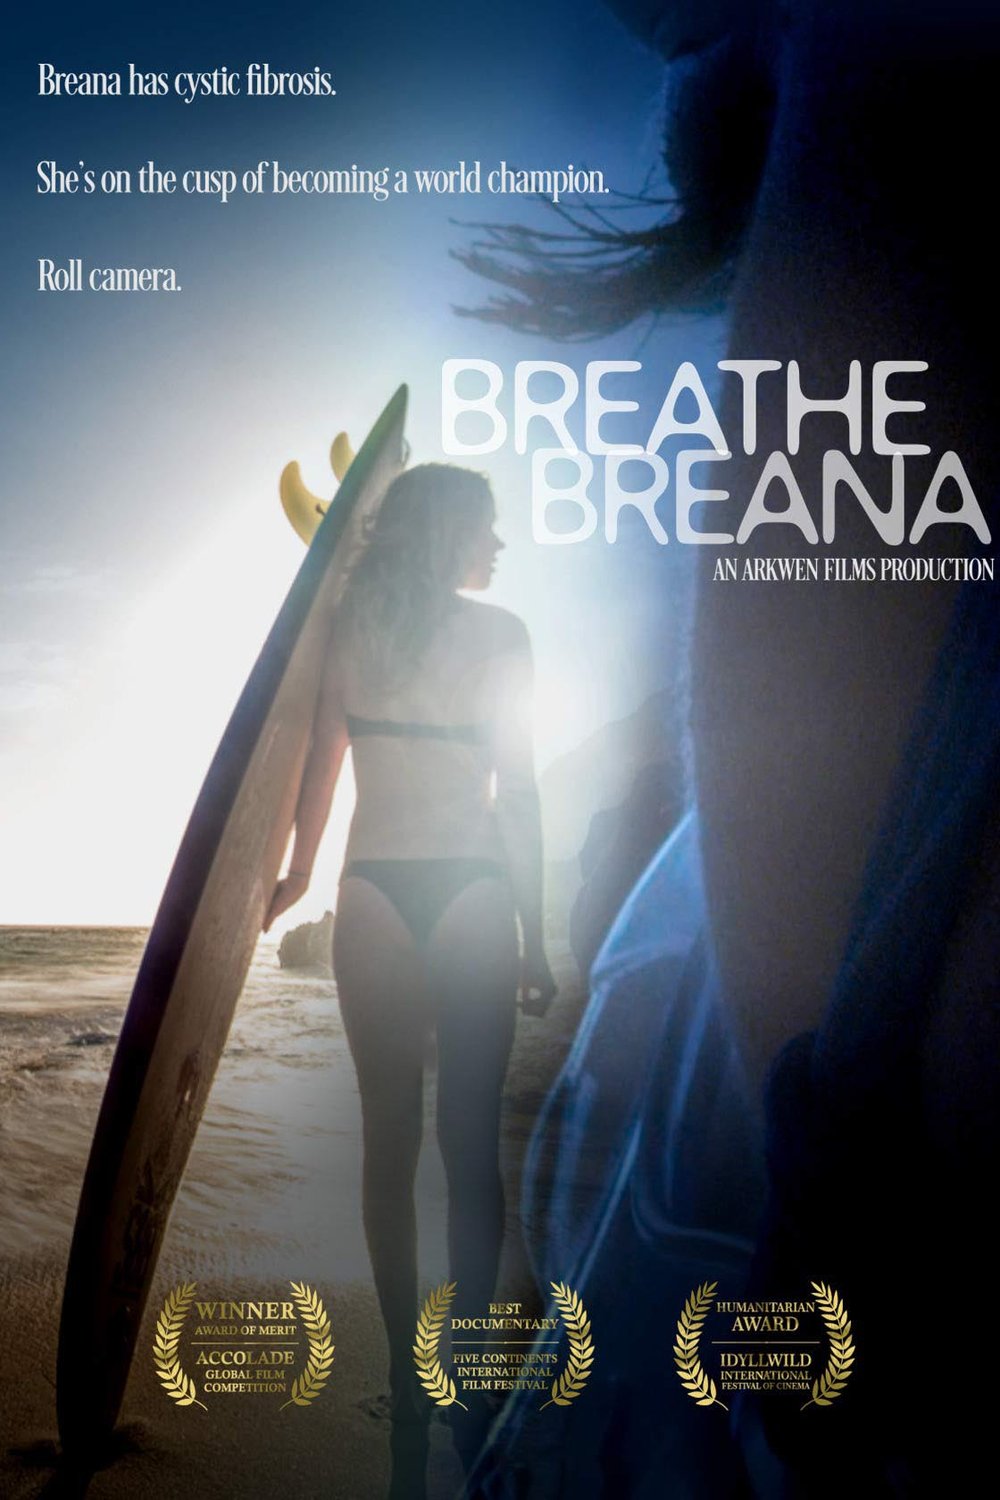 Poster of the movie Breathe Breana